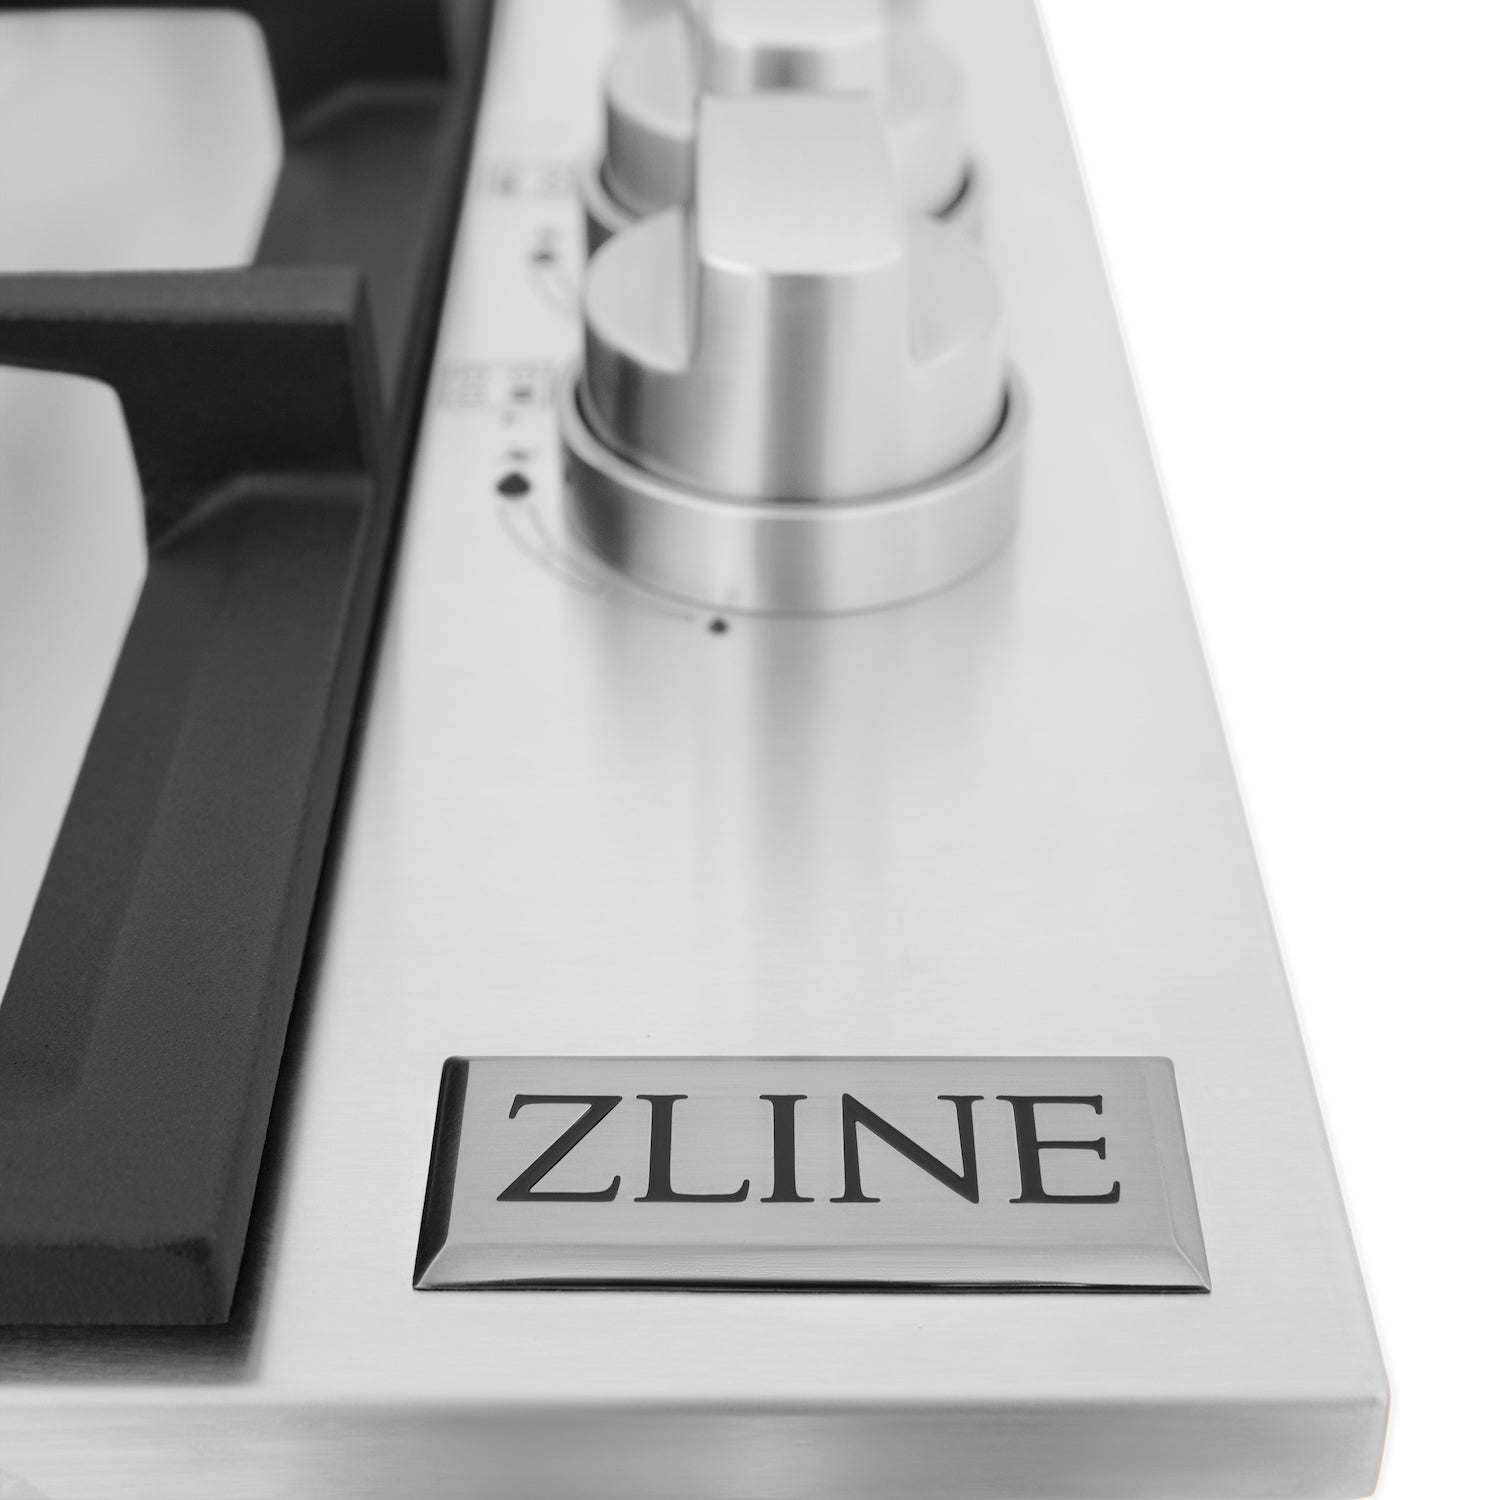 ZLINE logo on front right corner of ZLINE 30 in. Gas Cooktop (RC30)